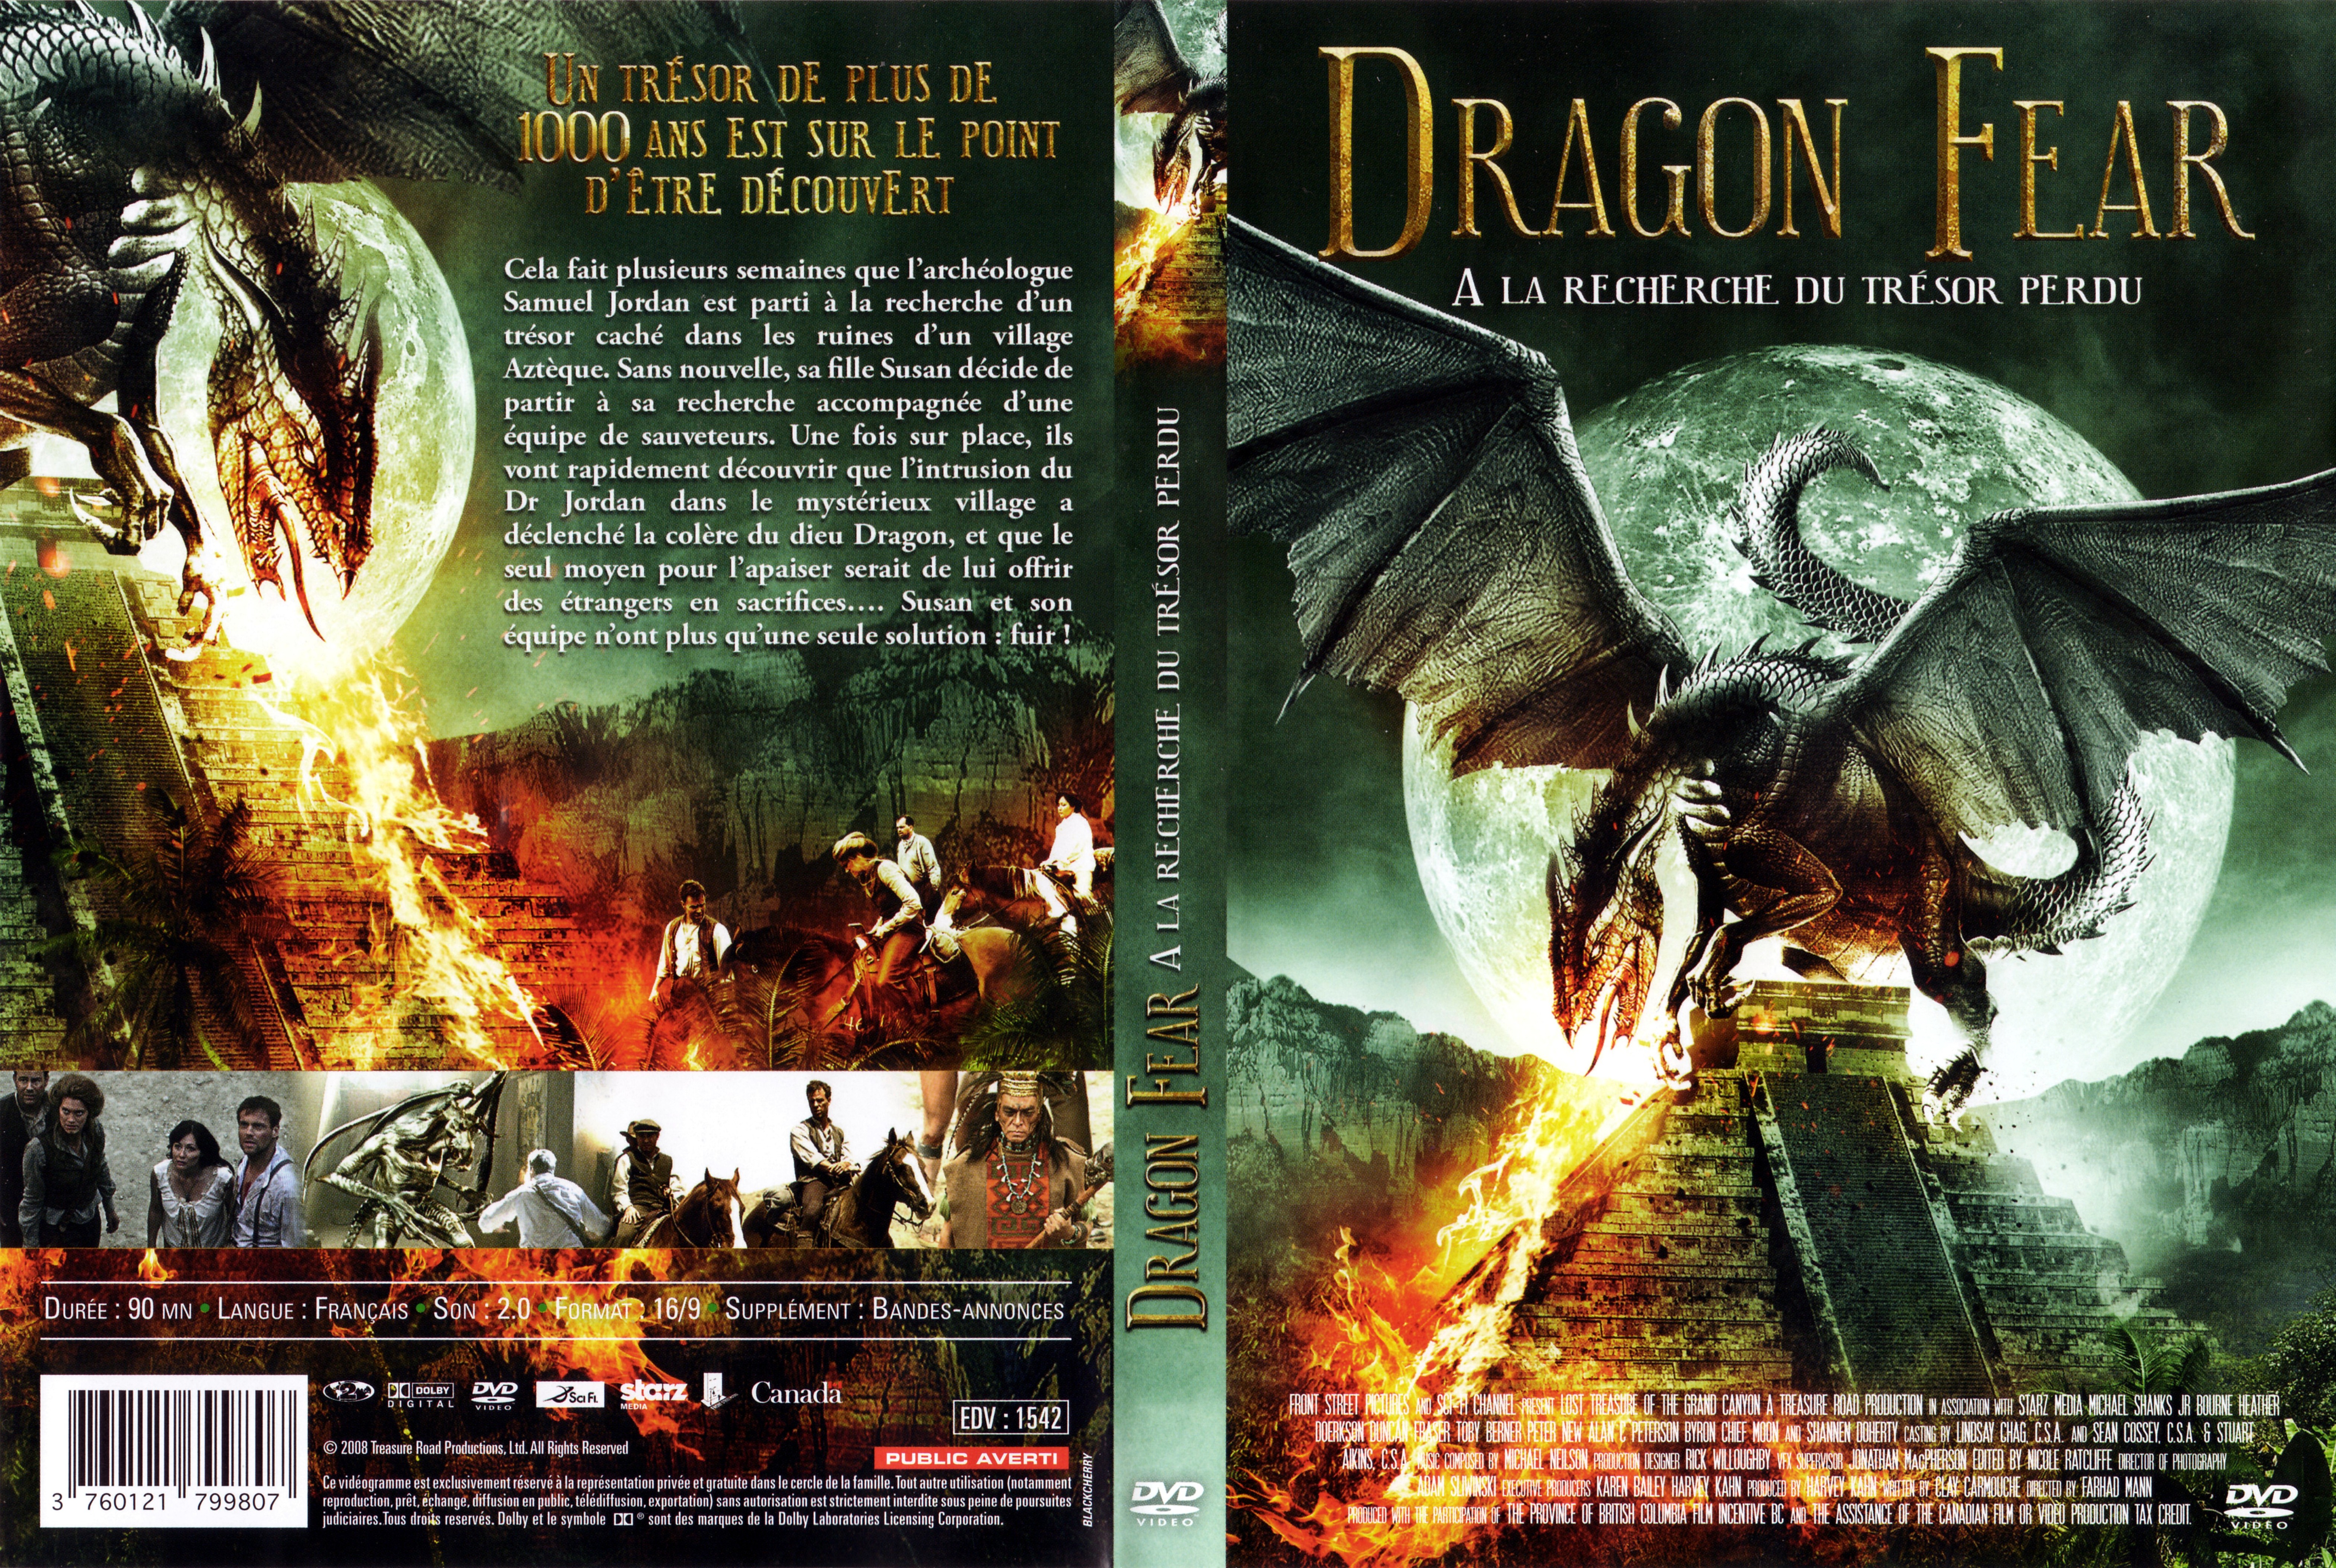 Jaquette DVD Dragon fear